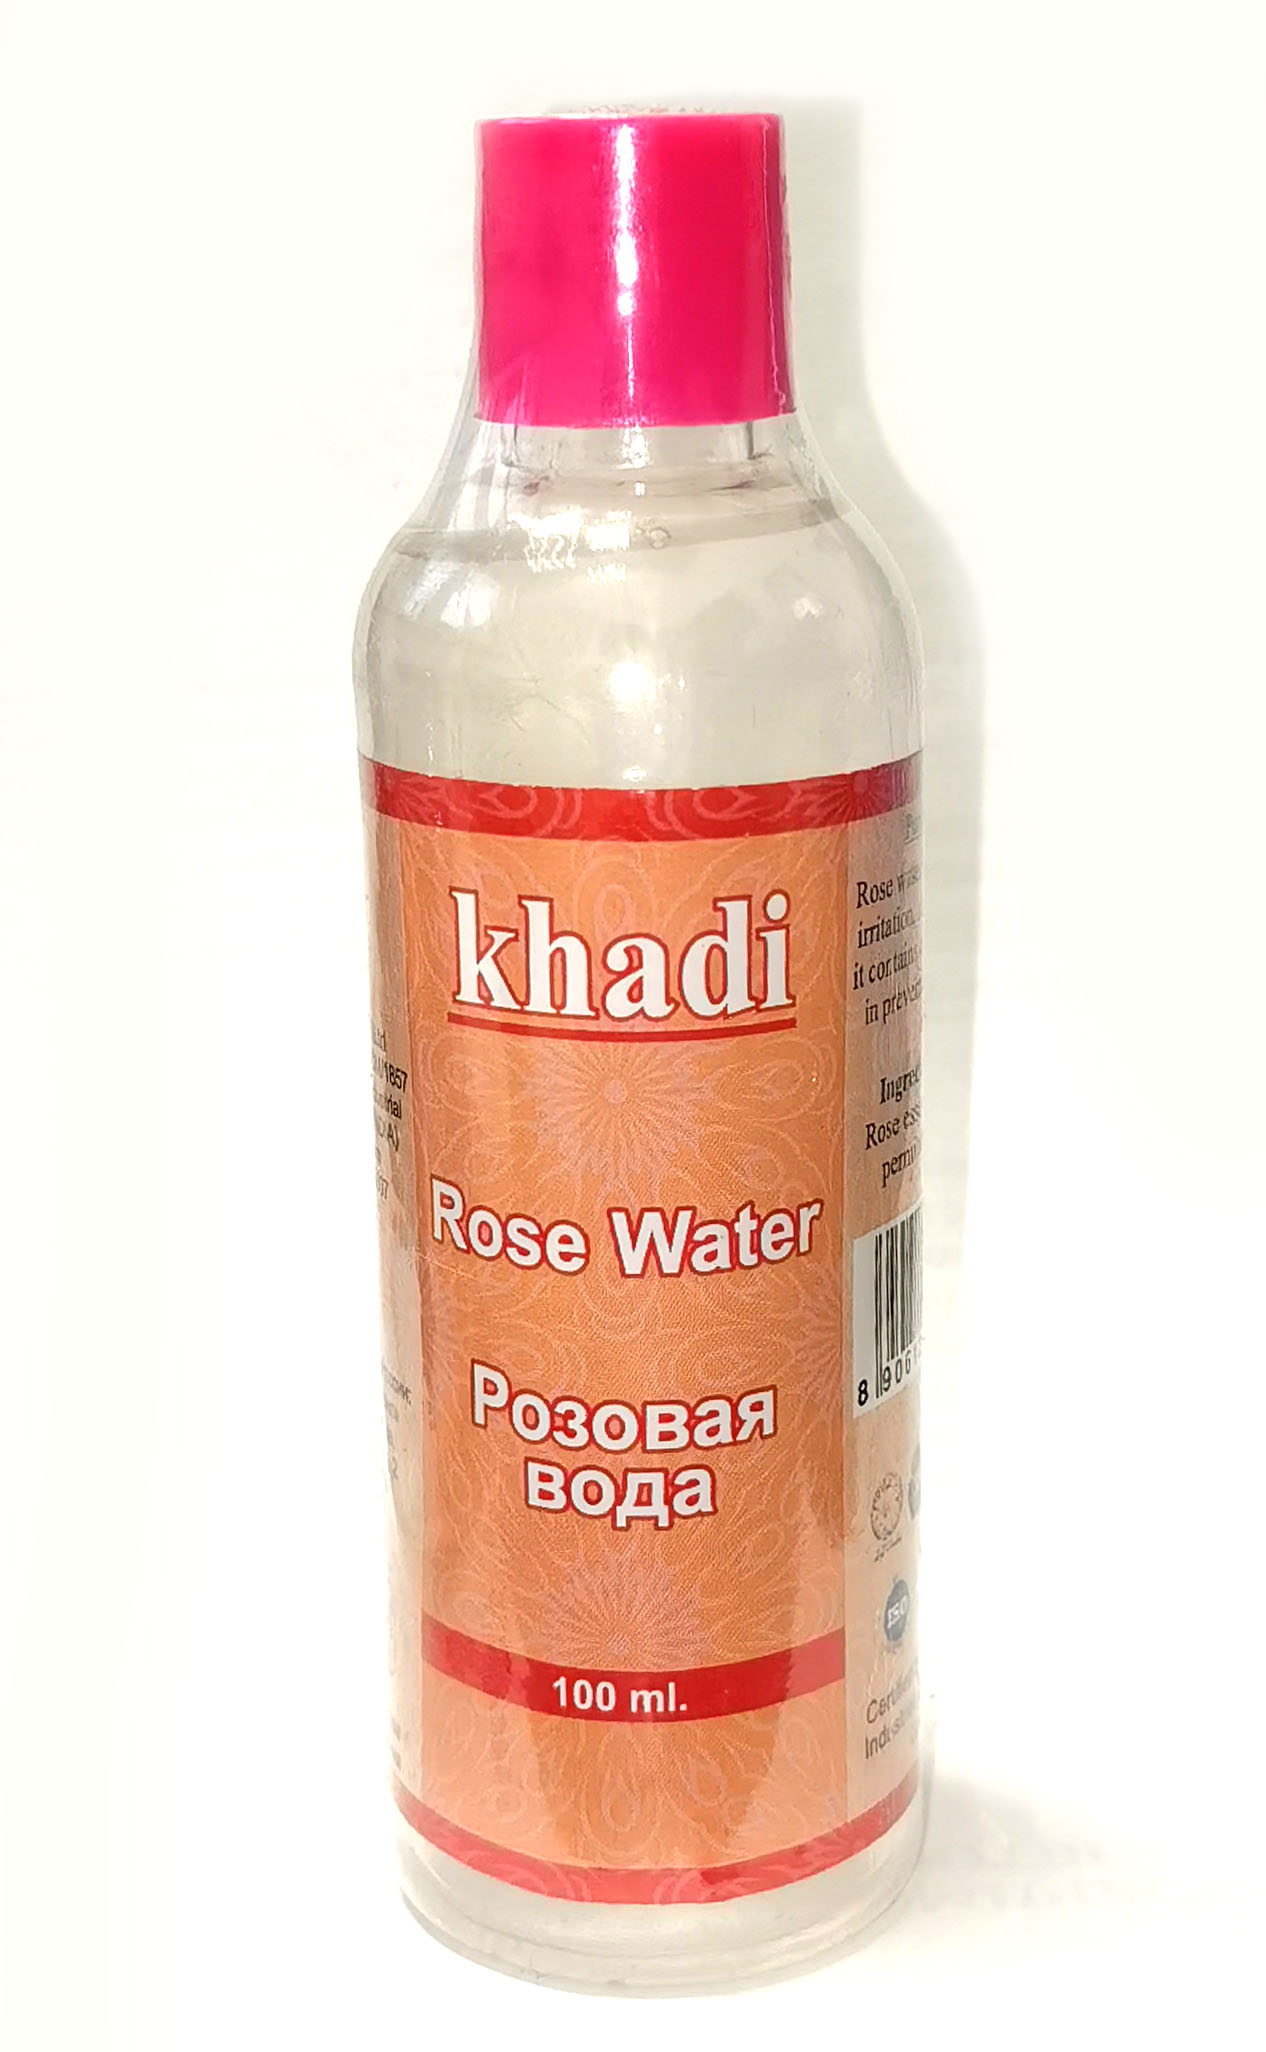 ROSE WATER, Khadi (РОЗОВАЯ ВОДА, Кхади), 100 мл.